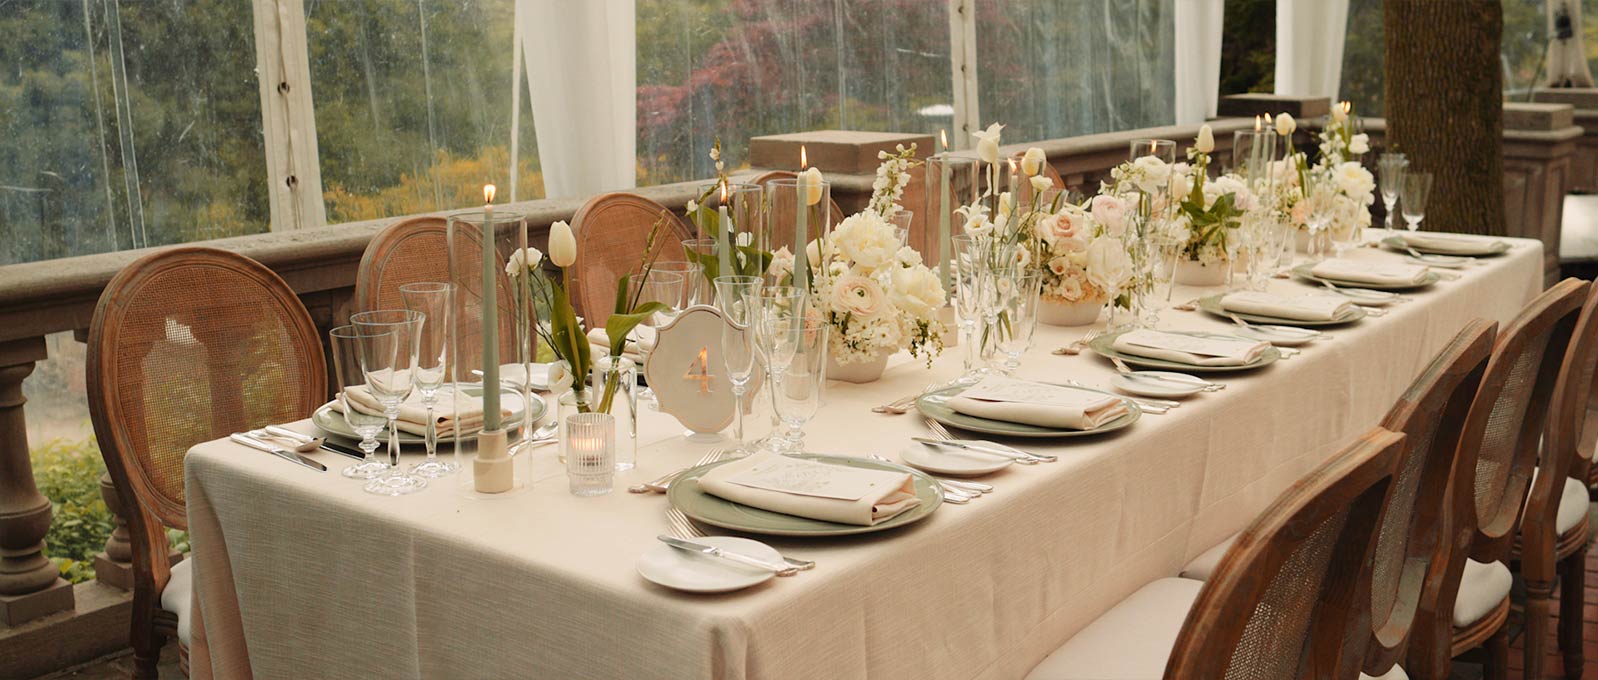 Graydon Hall Manor Outdoor Wedding Reception Details